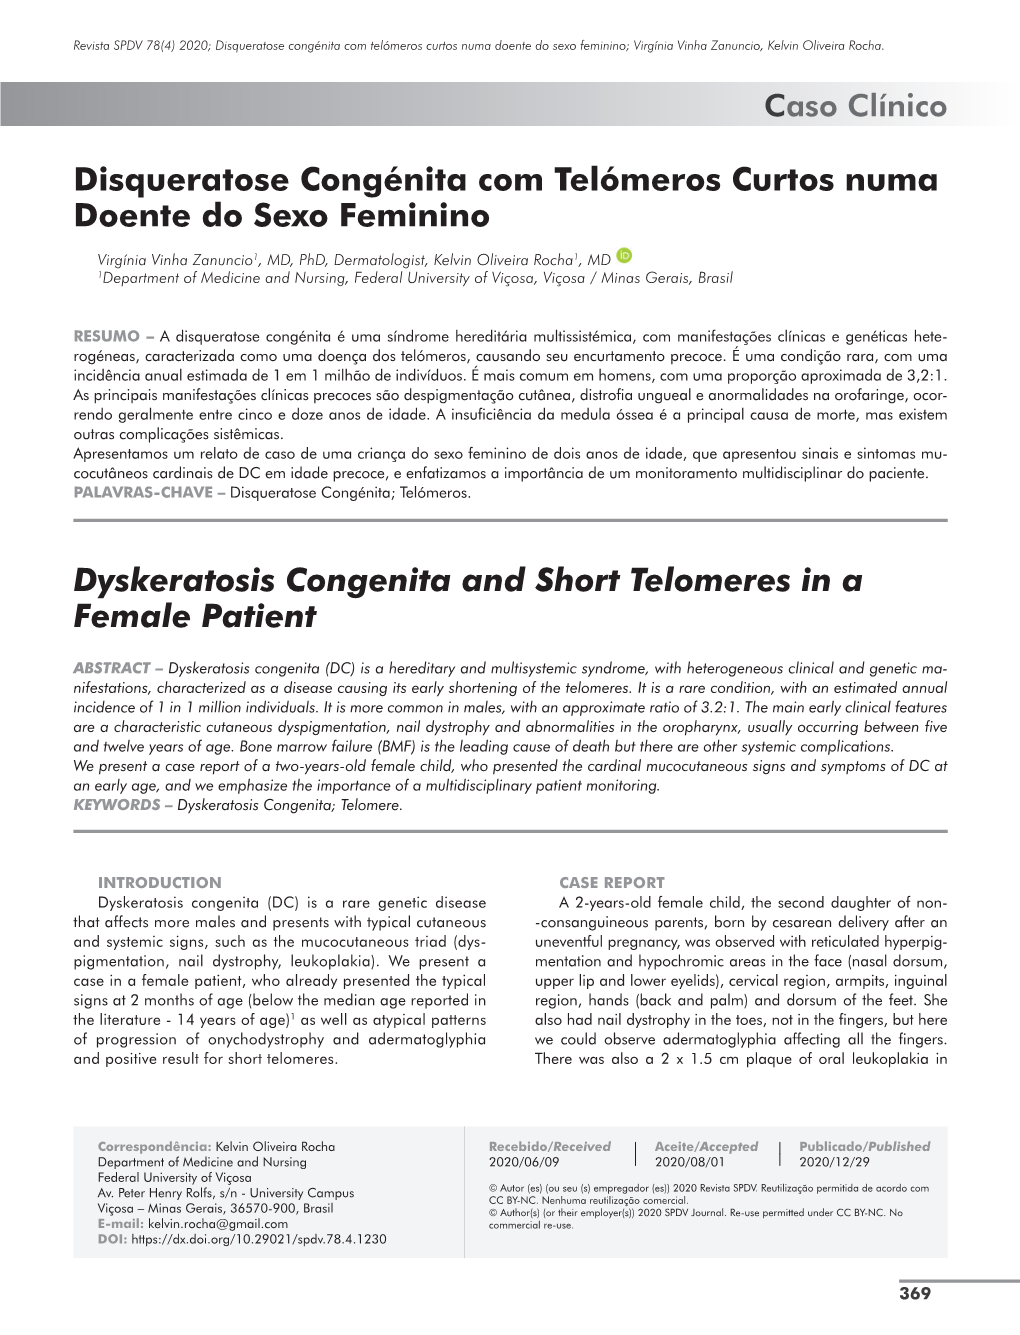 Disqueratose Congénita Com Telómeros Curtos Numa Doente Do Sexo Feminino; Virgínia Vinha Zanuncio, Kelvin Oliveira Rocha